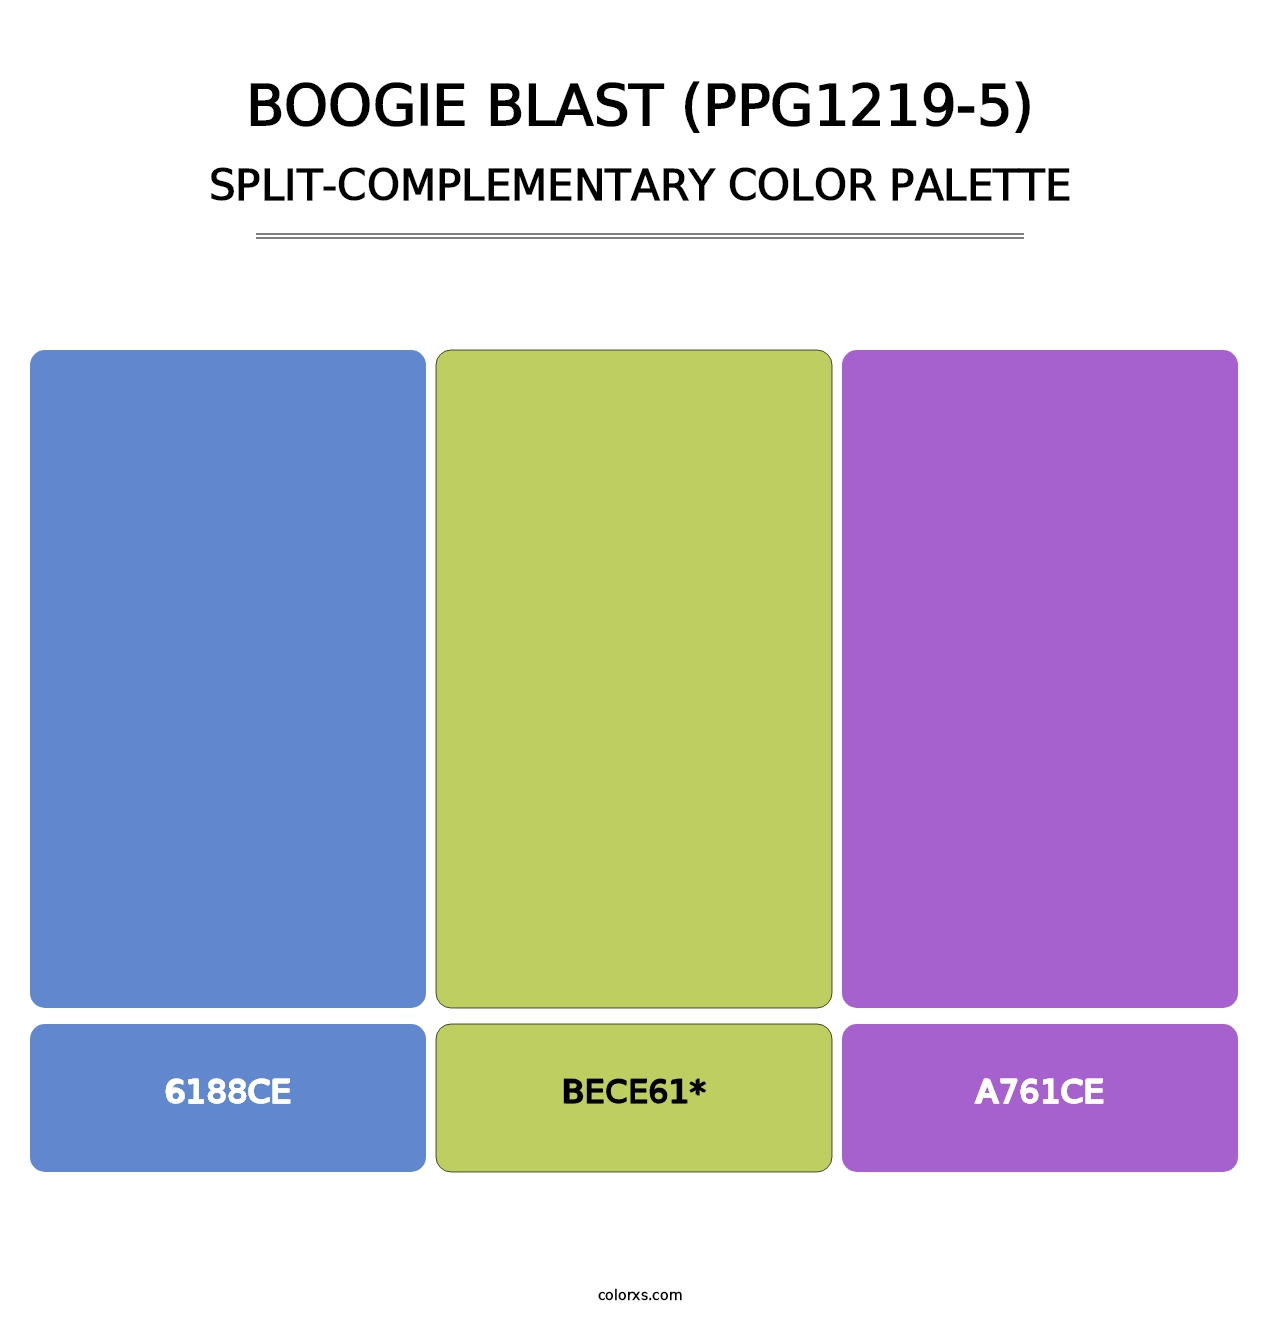 Boogie Blast (PPG1219-5) - Split-Complementary Color Palette